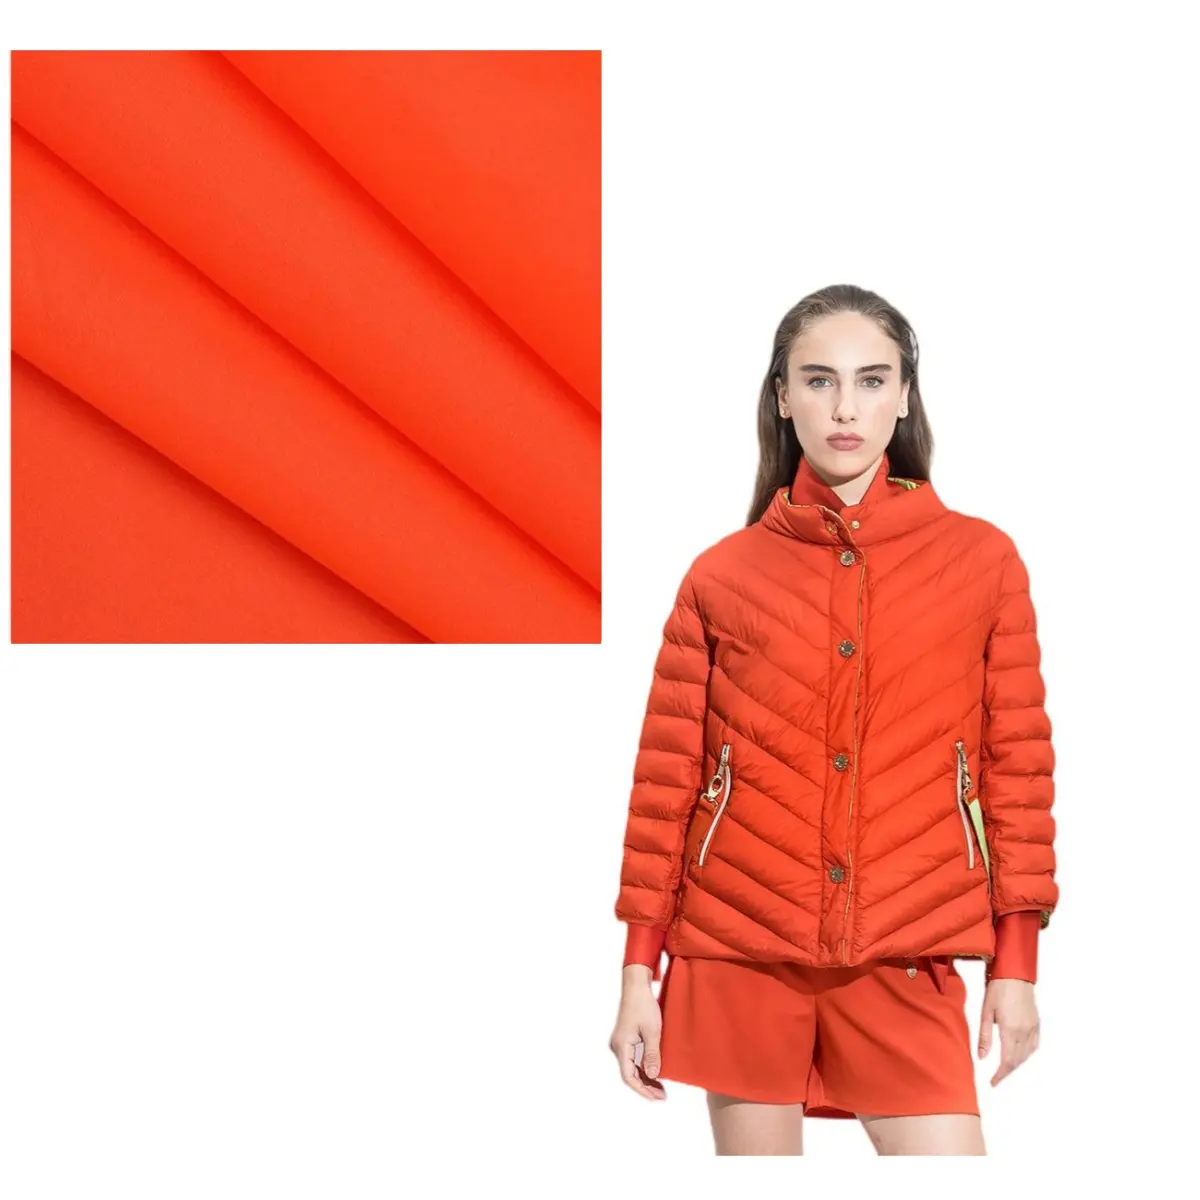 300t polyester taffeta fabric lightweight outdoor fabric outdoor jacket lining fabric